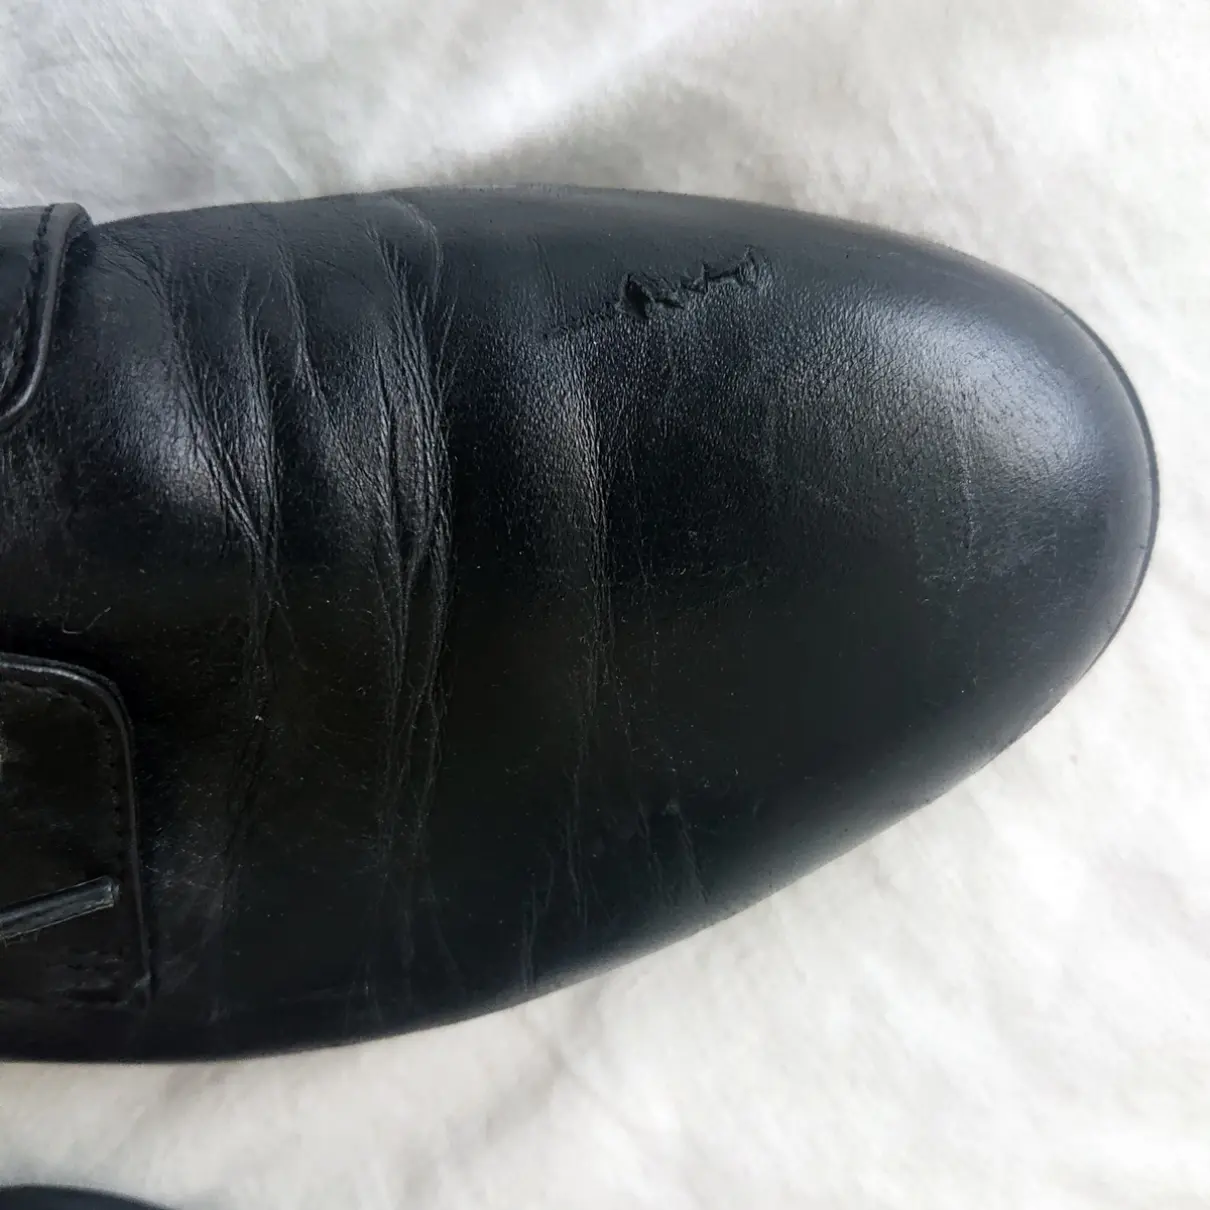 Leather boots Carlo Pazolini